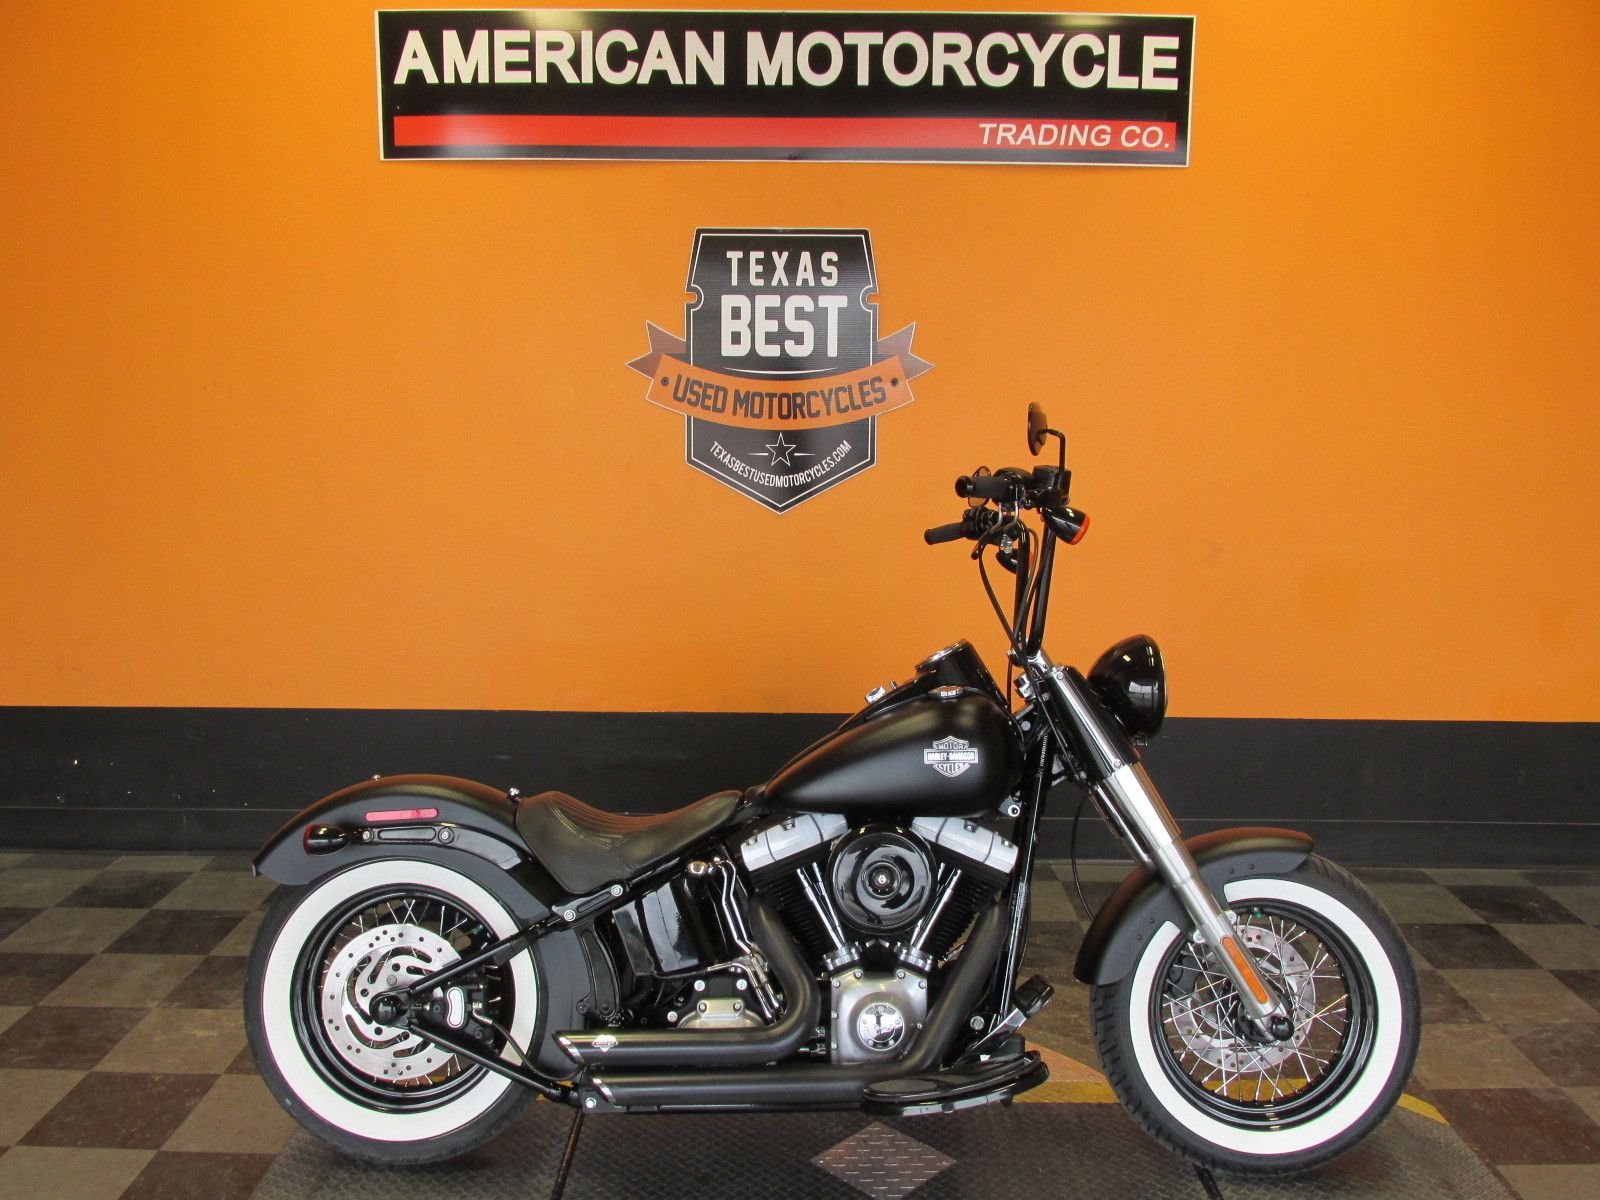 2013 Harley-Davidson Softail Slim | American Motorcycle Trading Company -  Used Harley Davidson Motorcycles